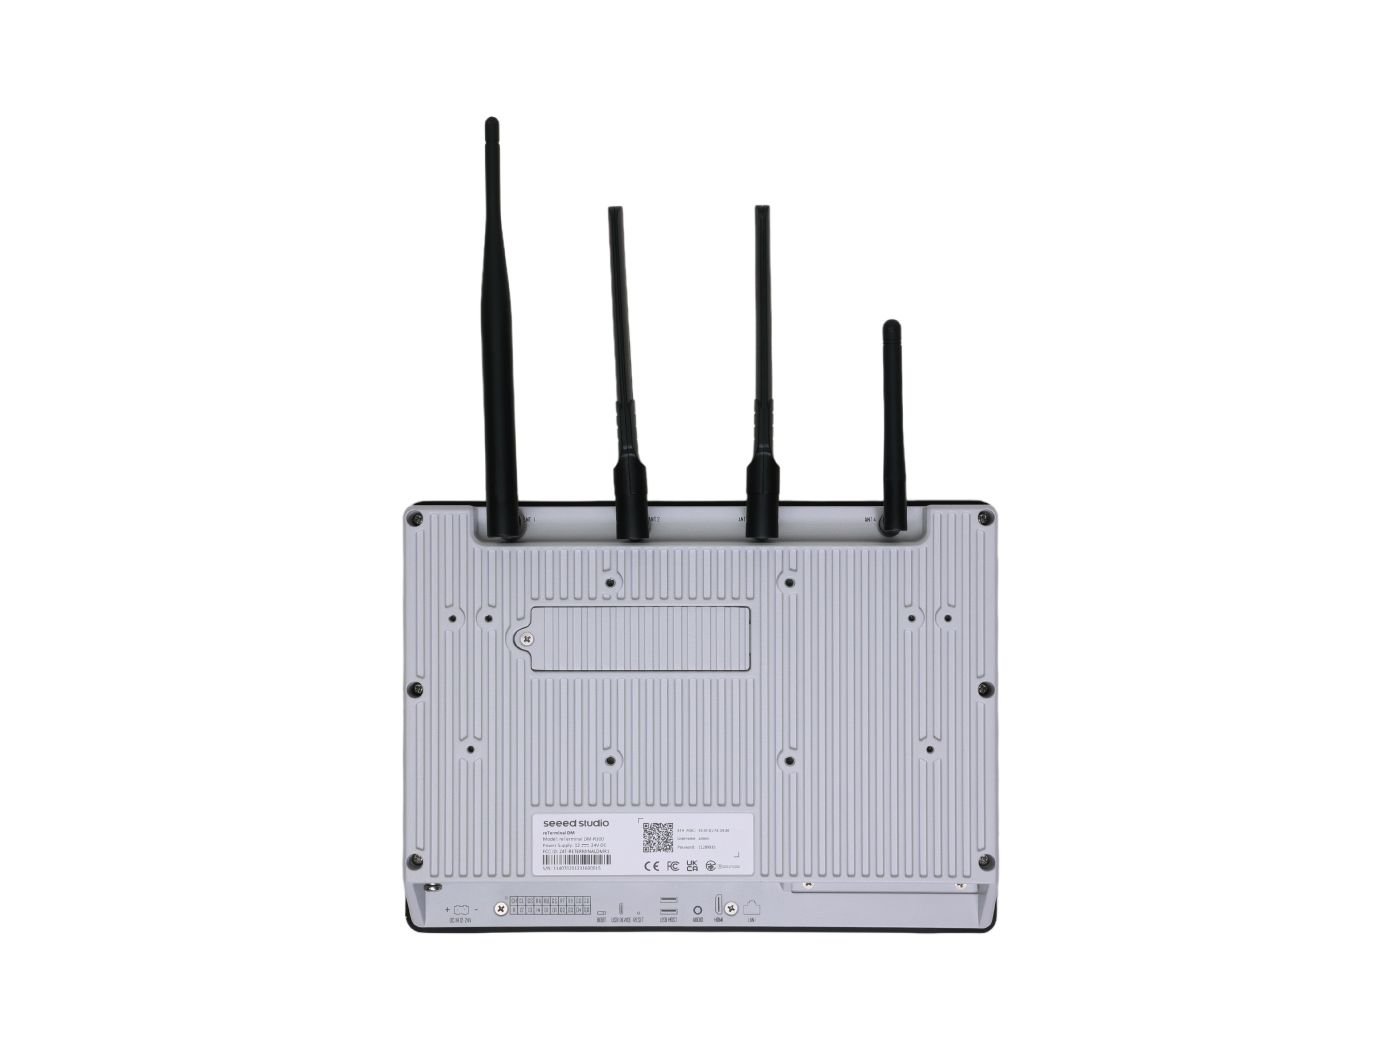 Wireless communication capabilities